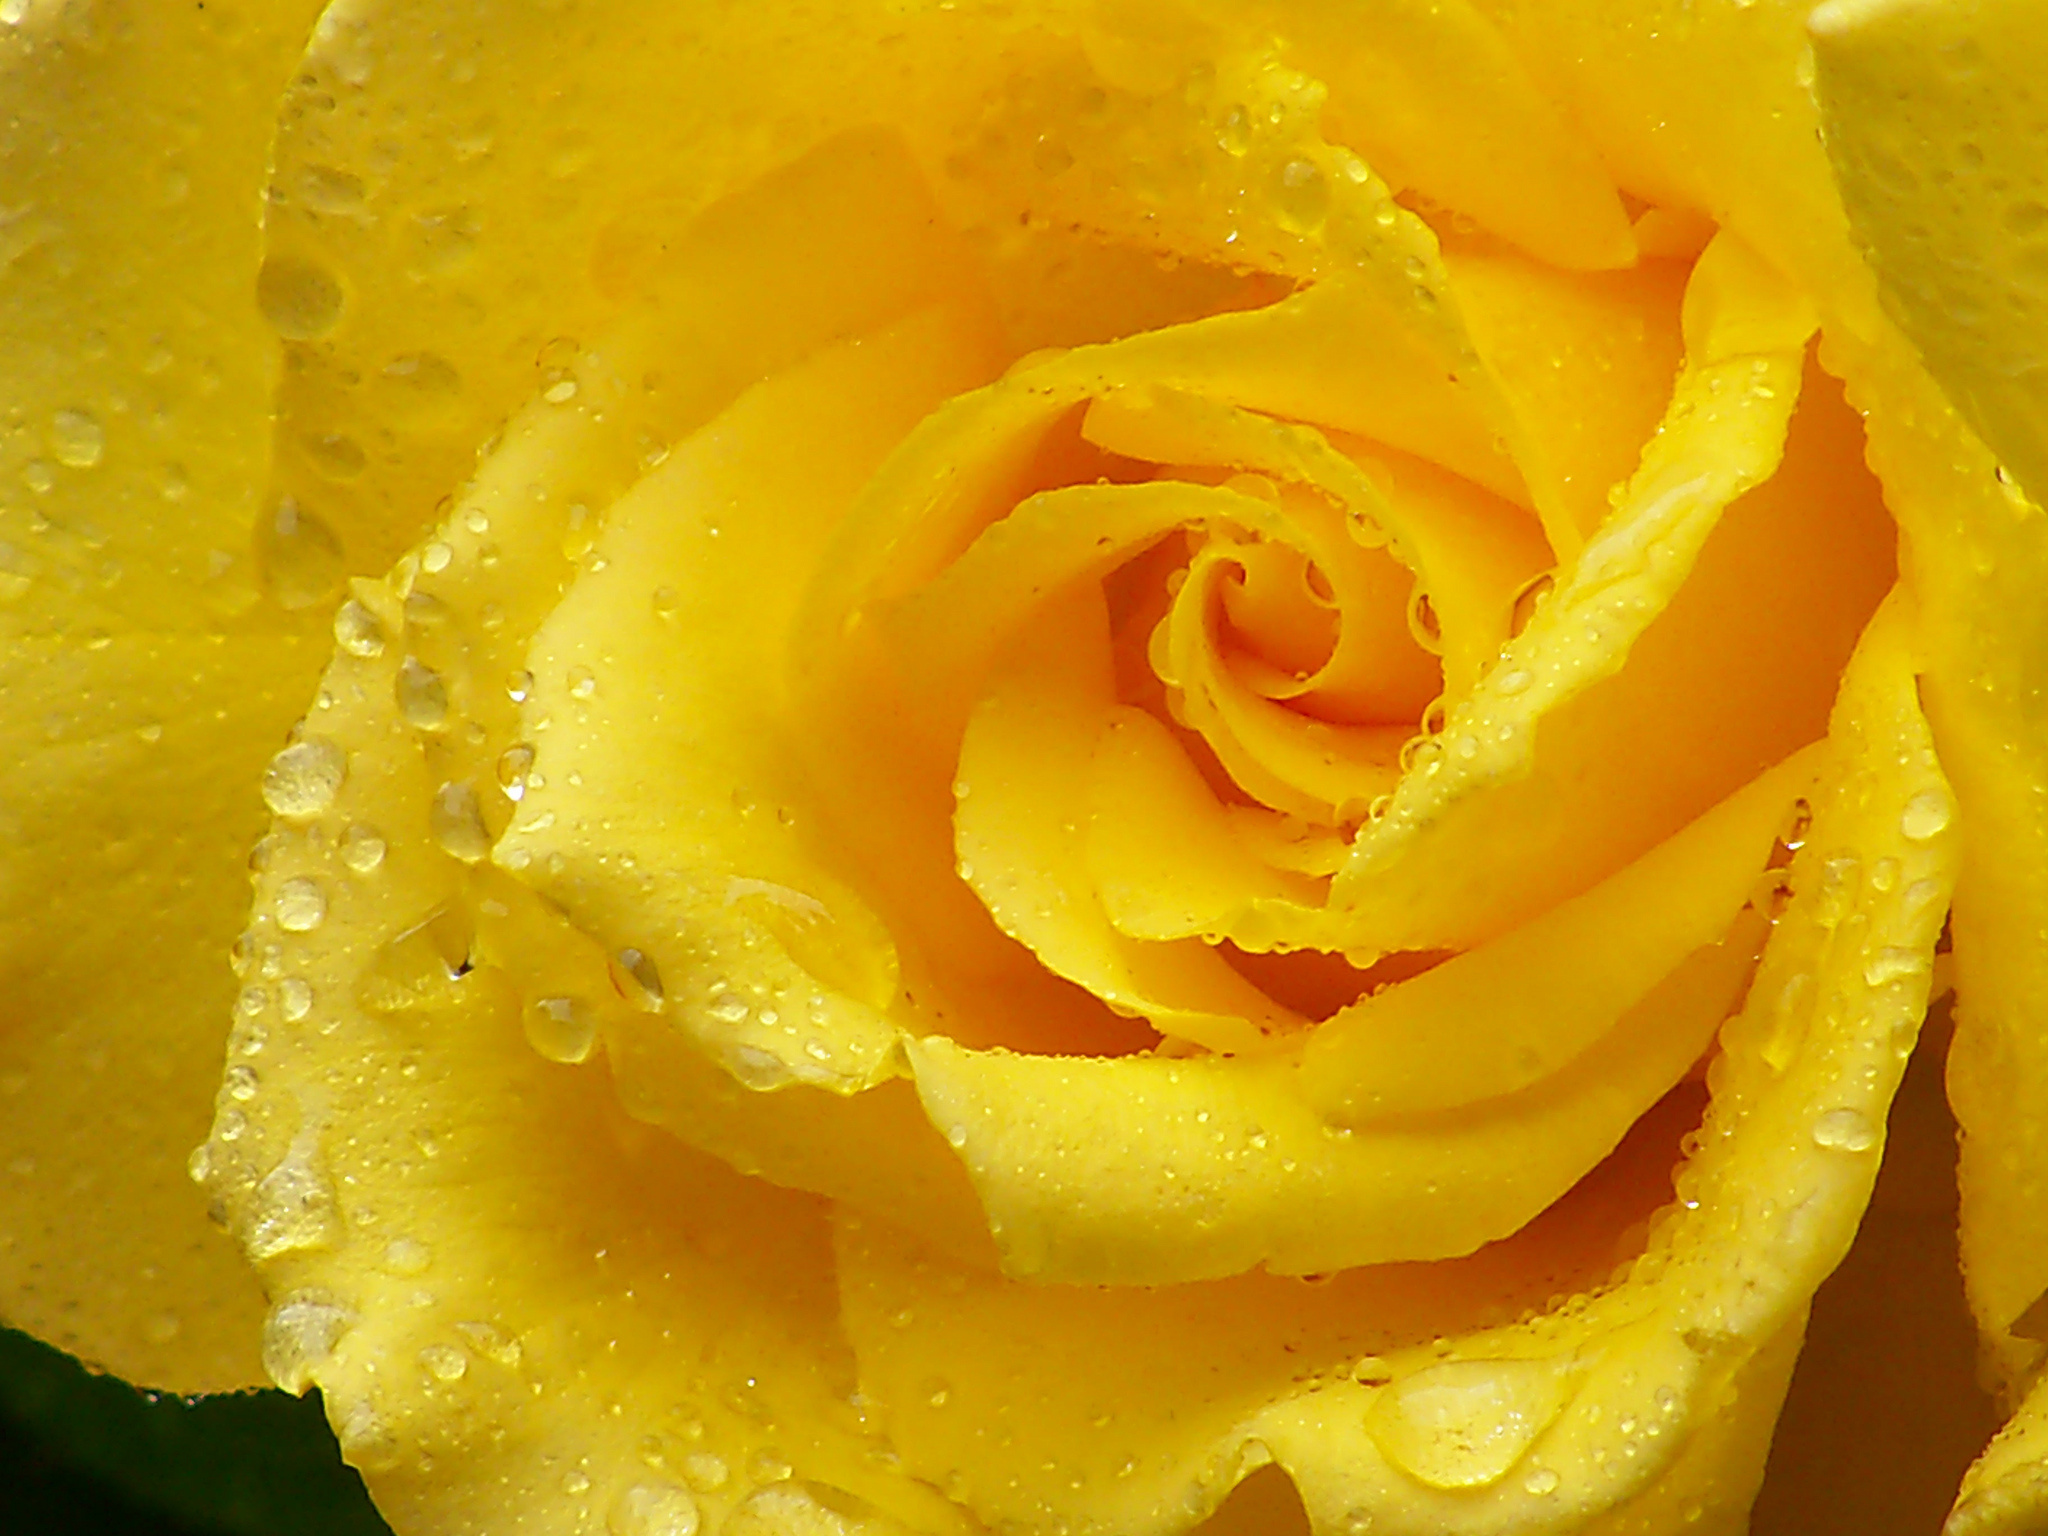 earth, rose, flower, water drop, yellow rose, flowers